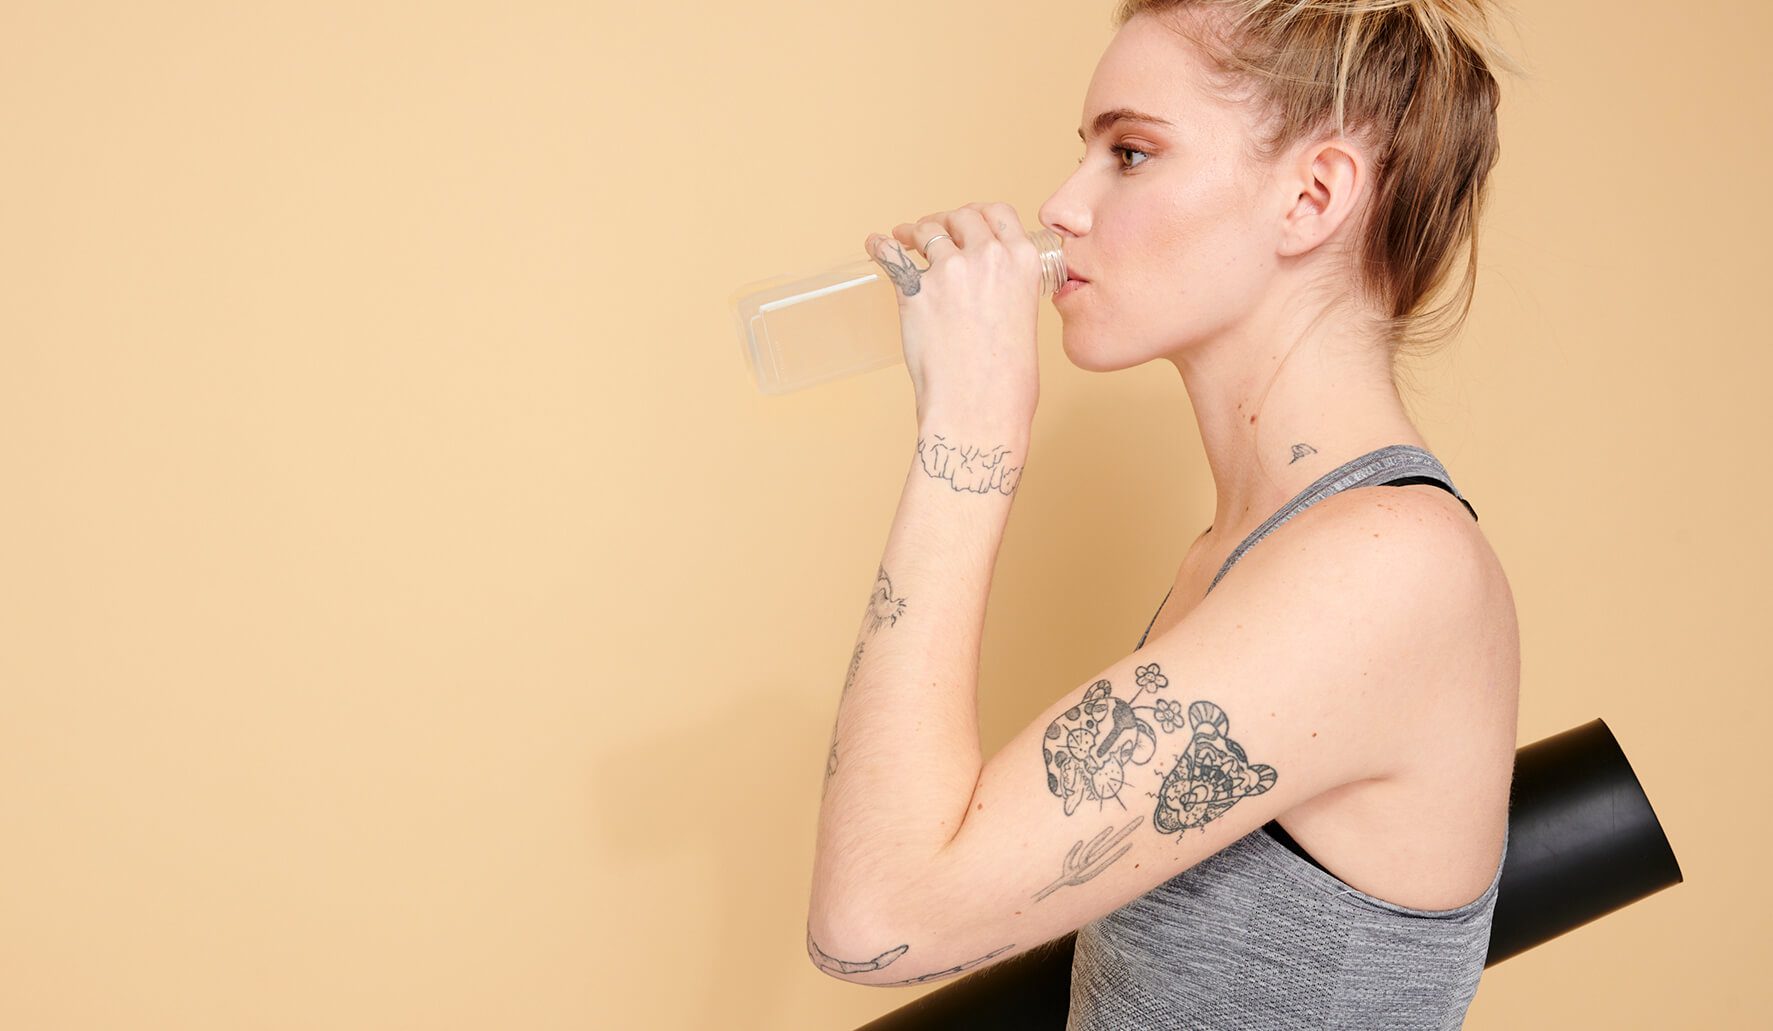 Drinking CBD water post yoga